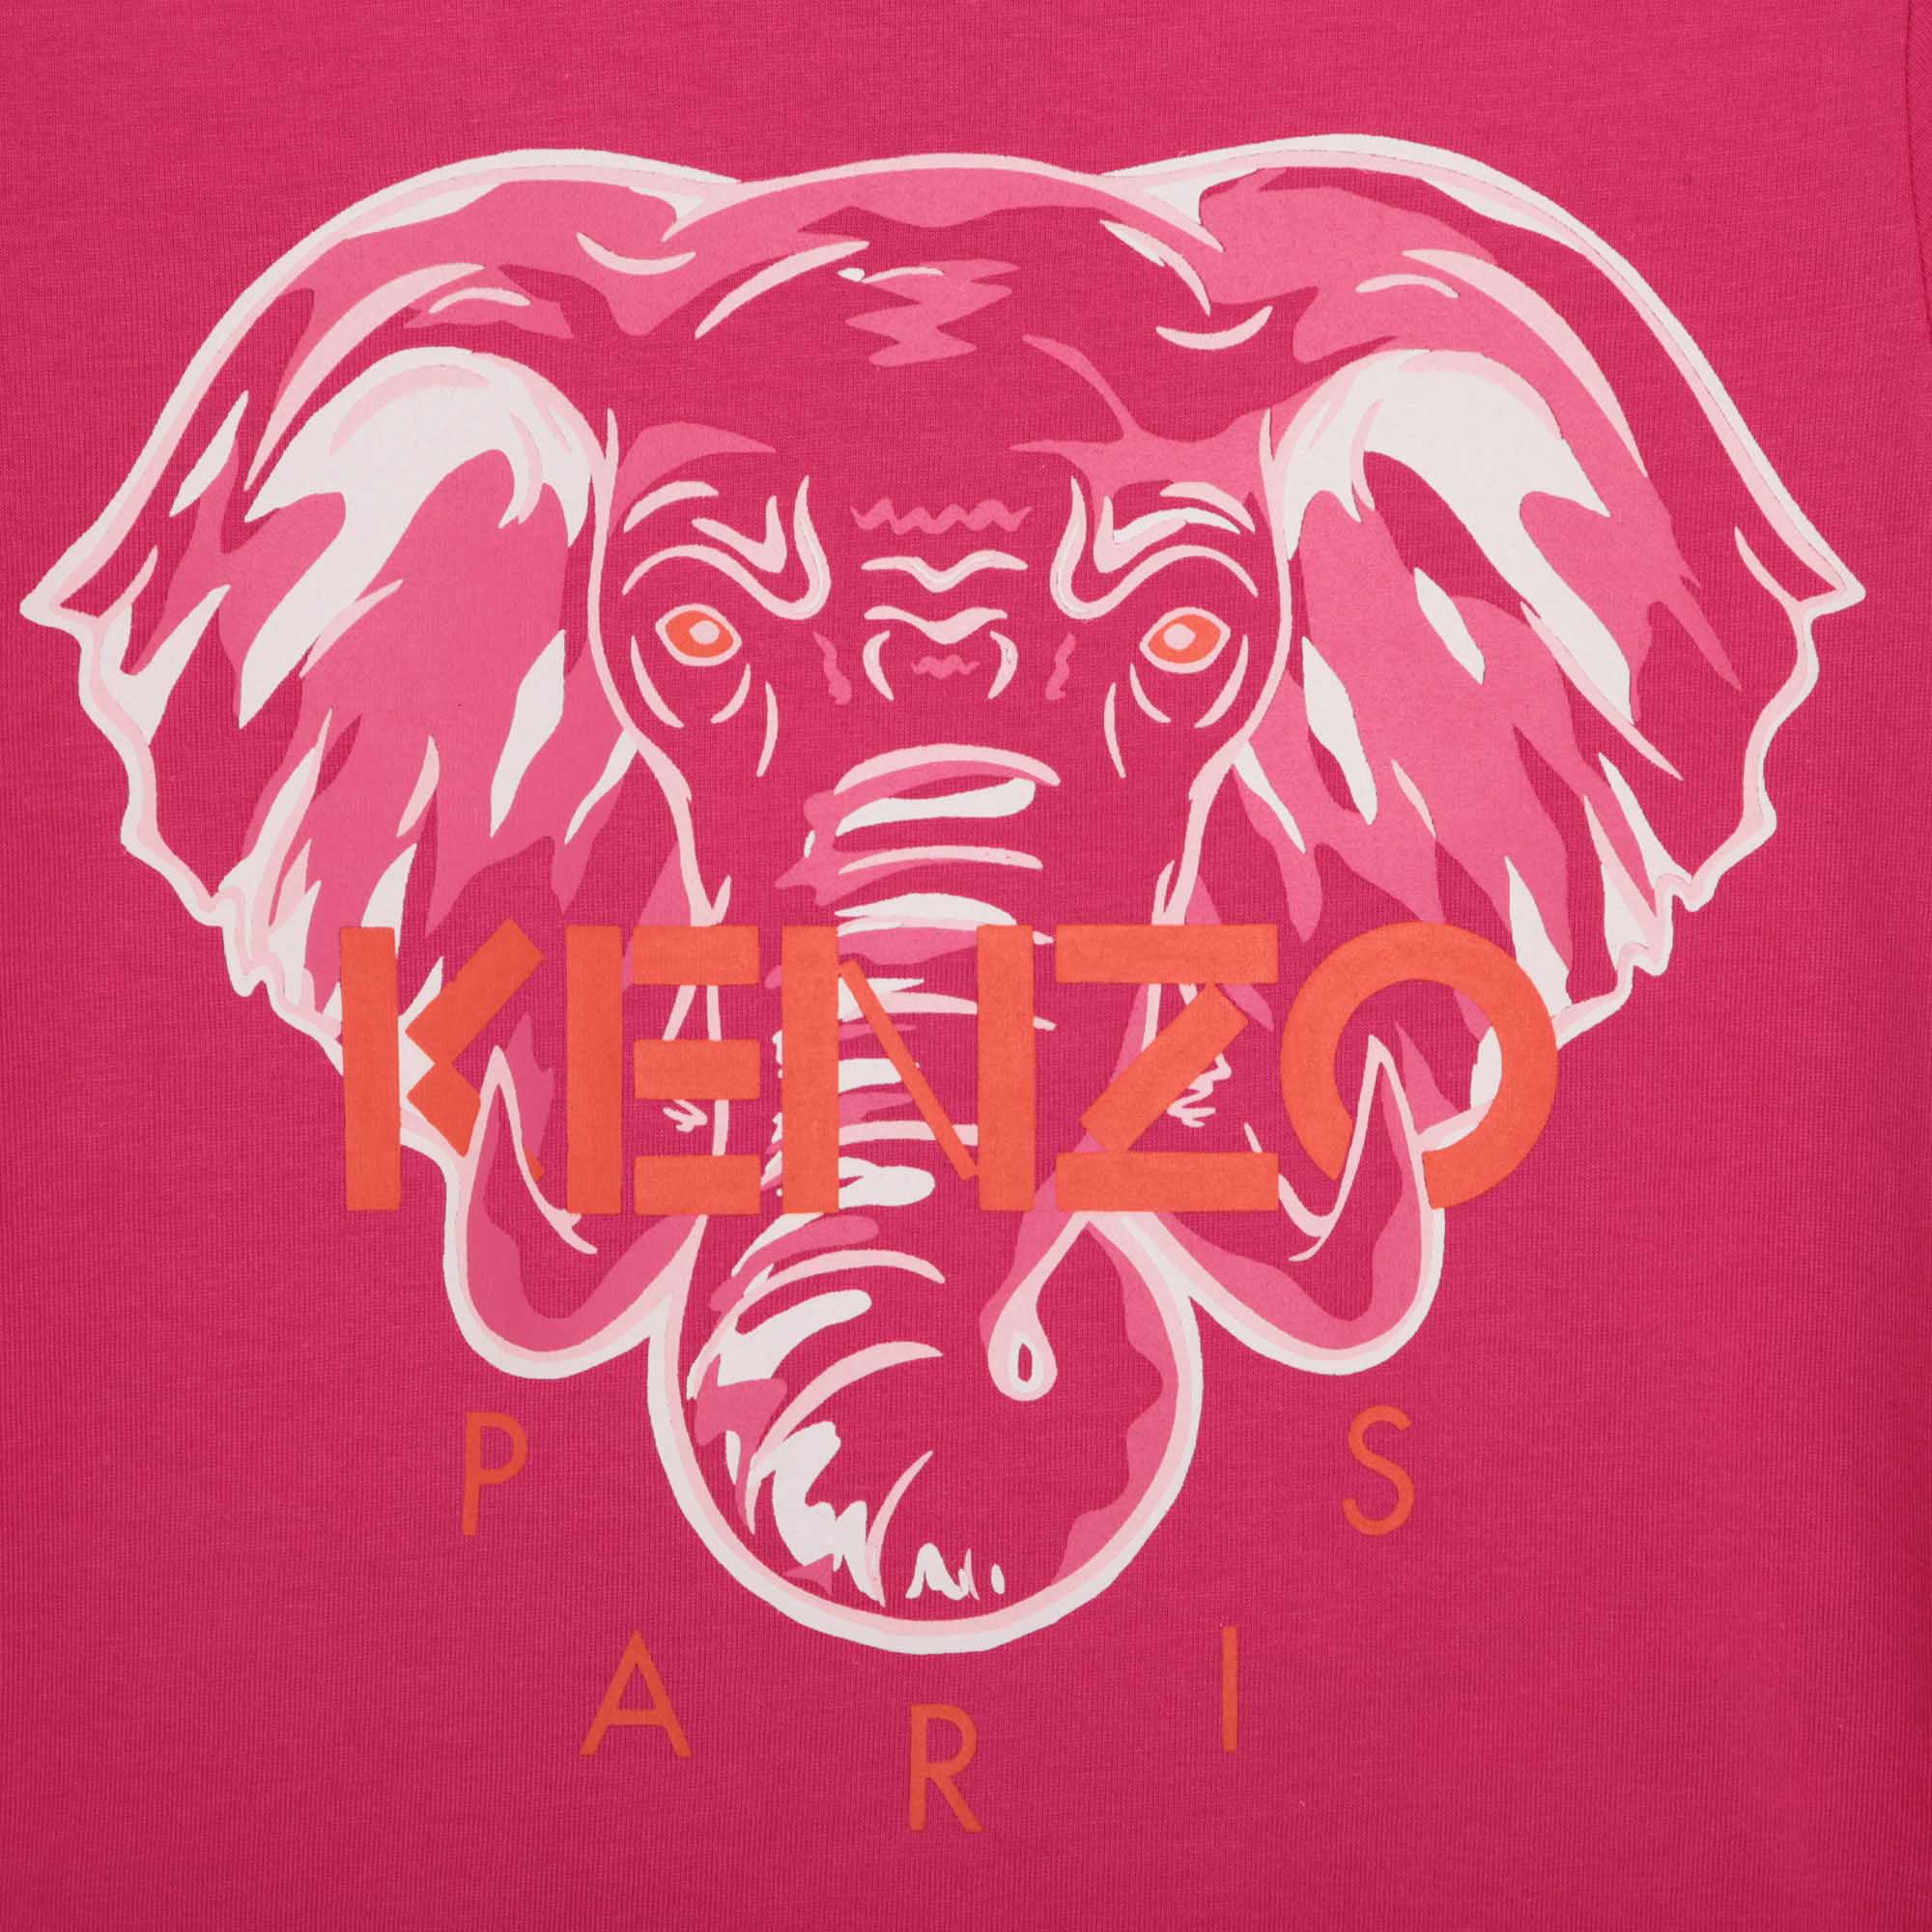 T-shirt manches courtes KENZO KIDS pour FILLE